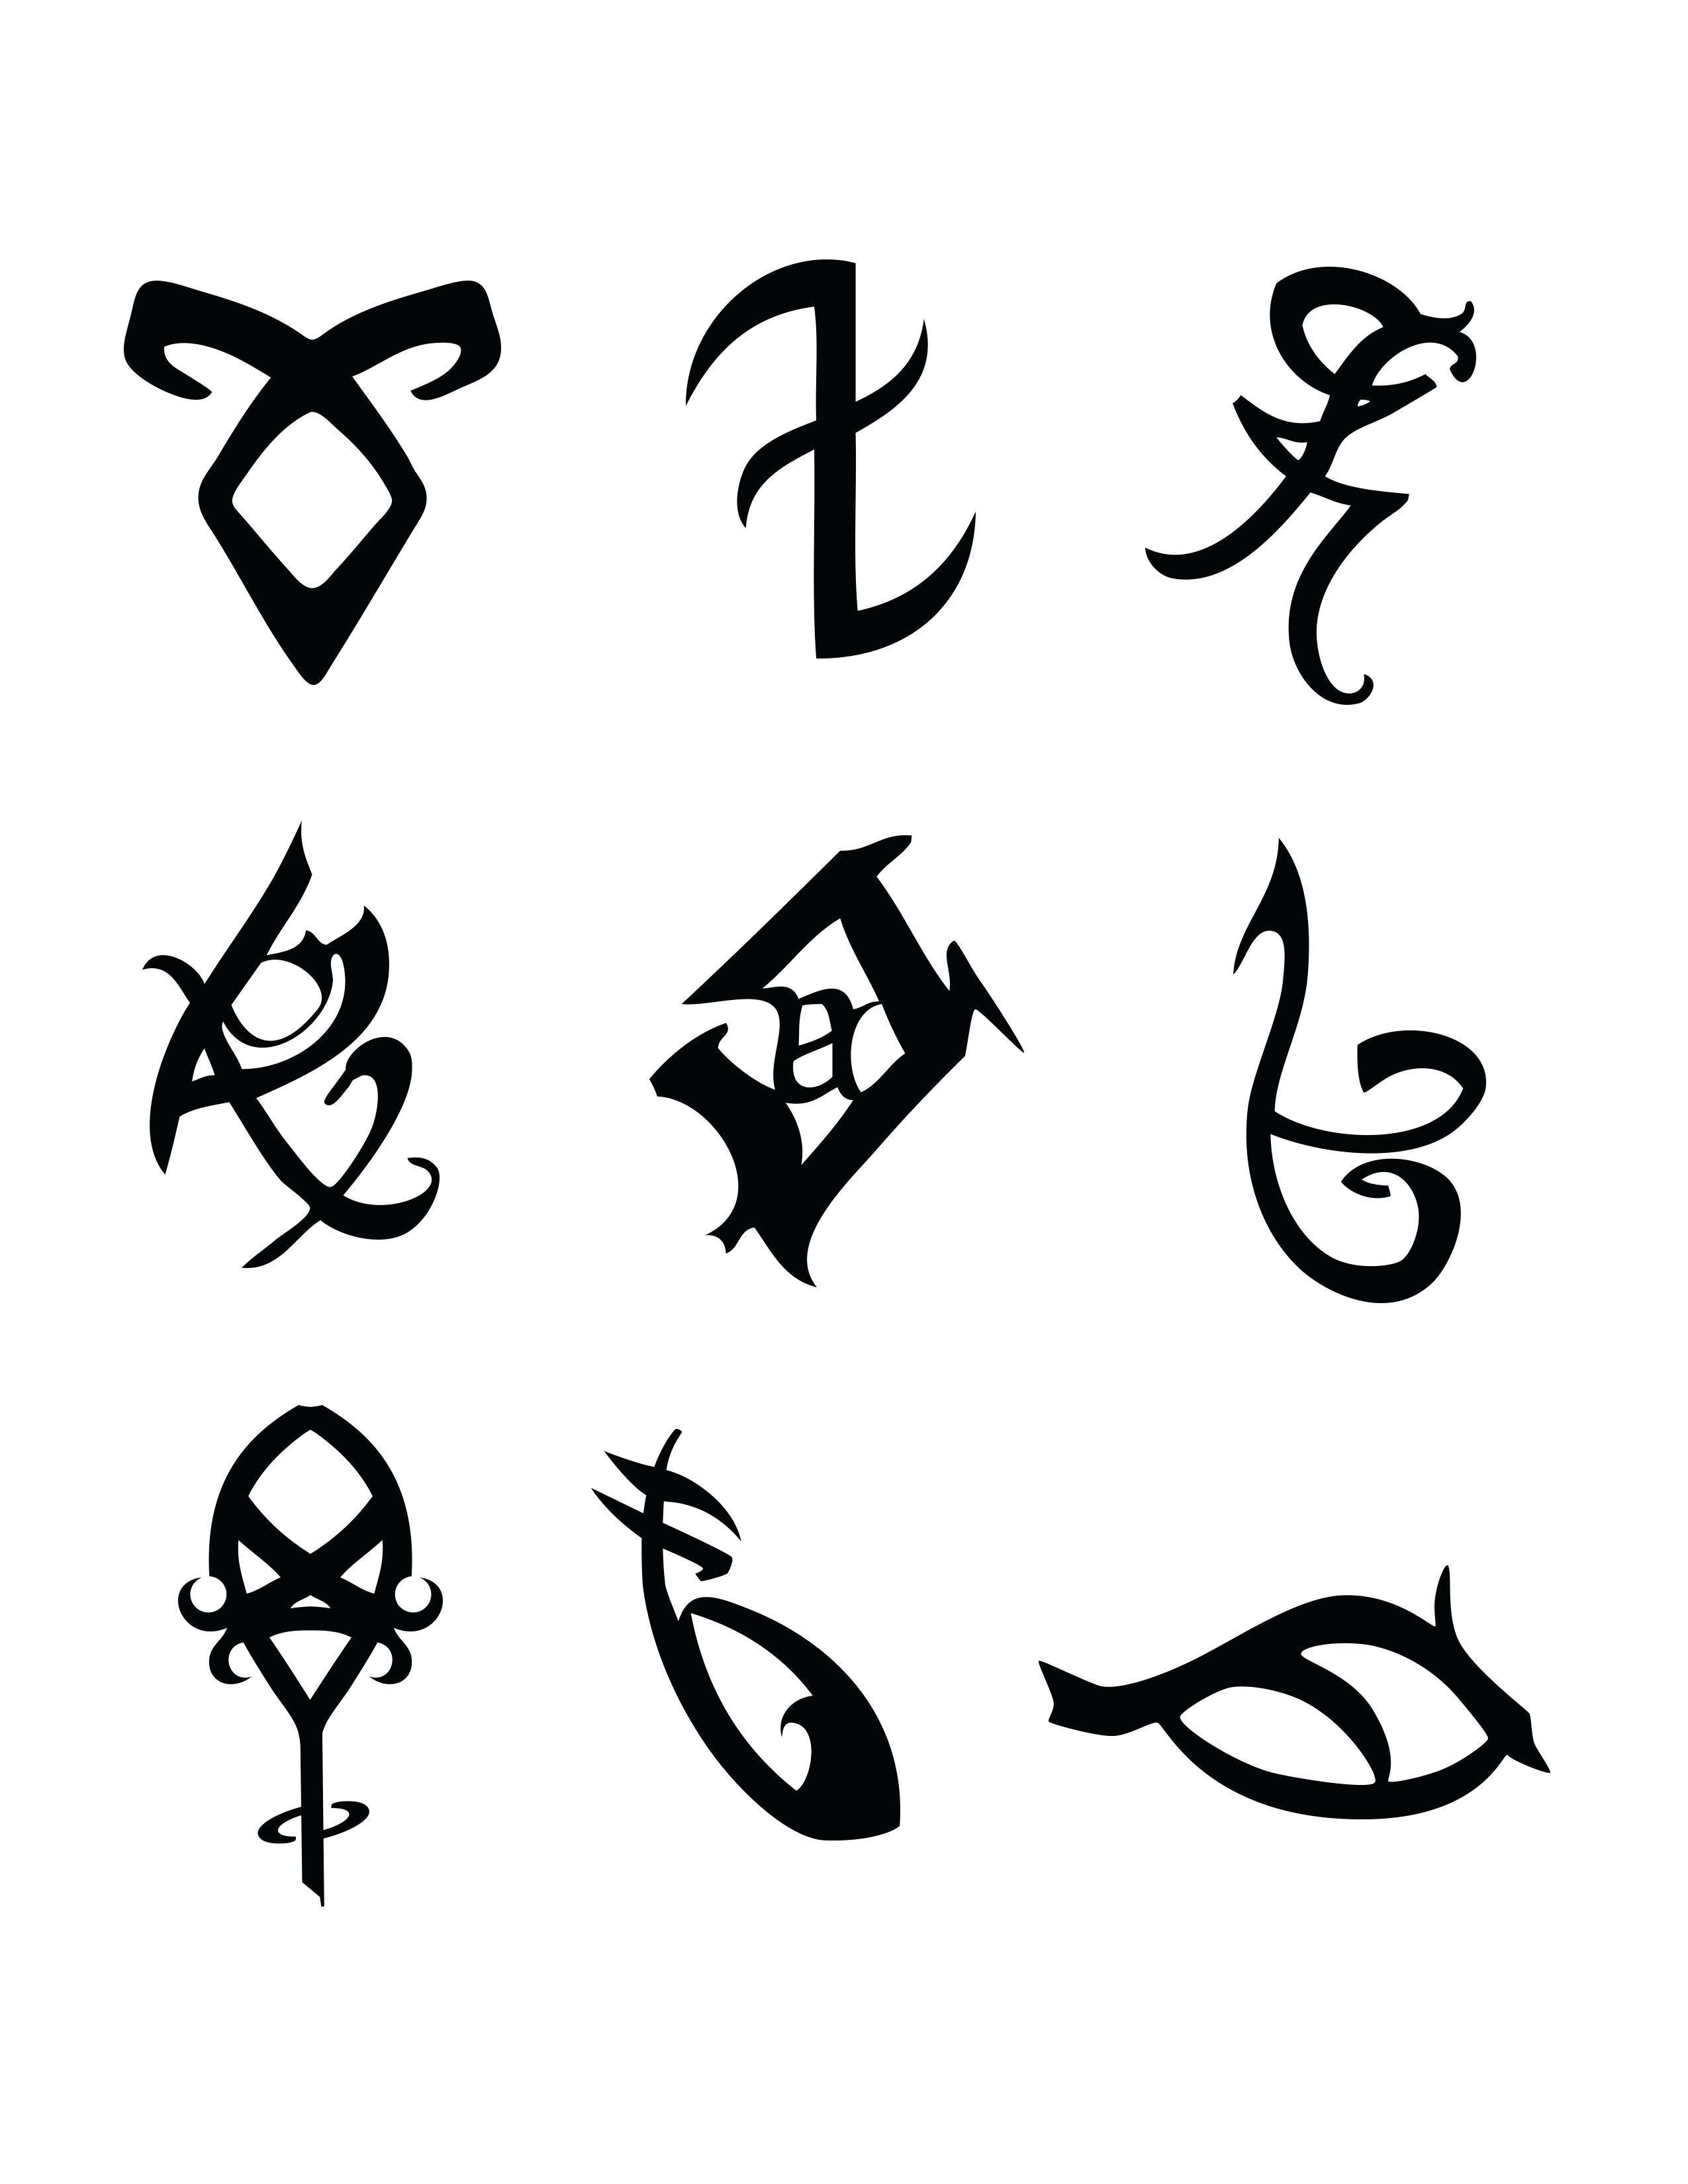 ★ How to hallow runes